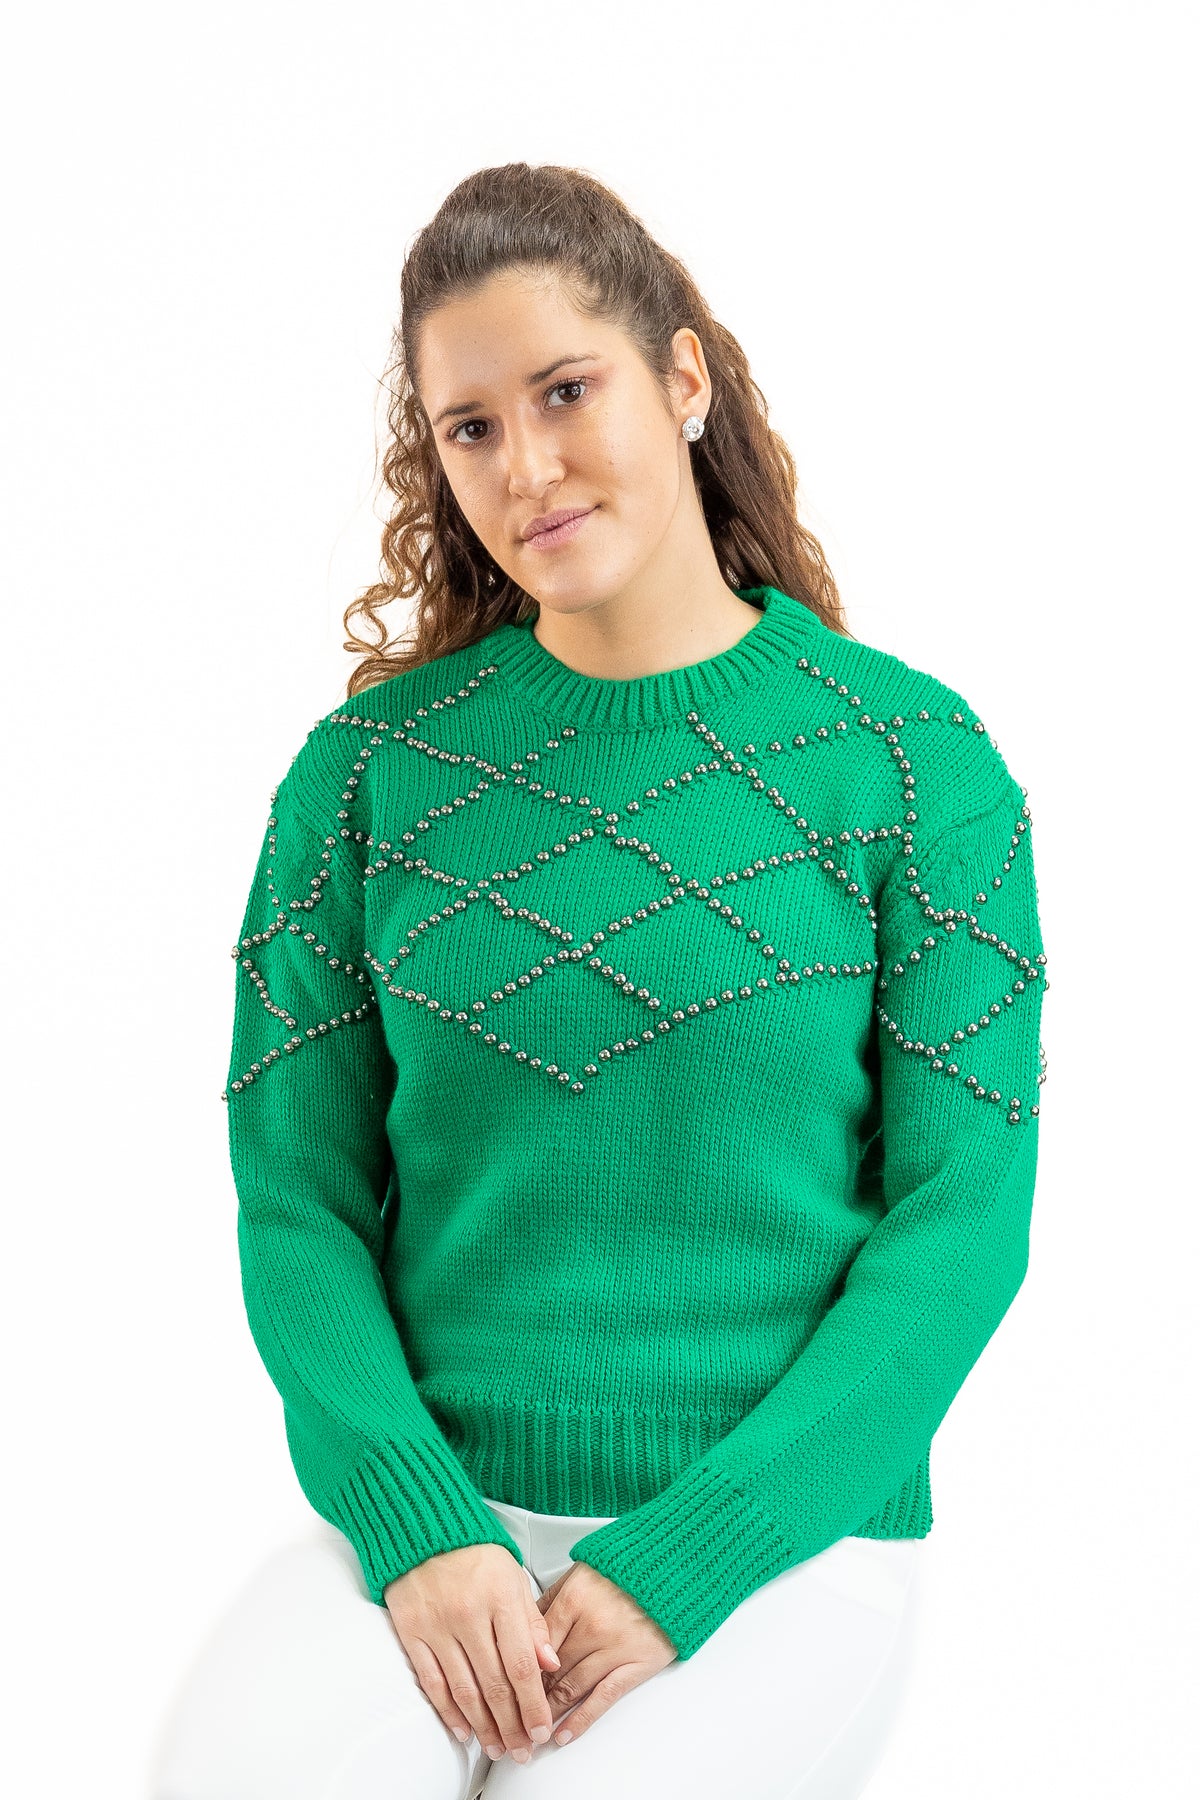 Green Pearled  sweater